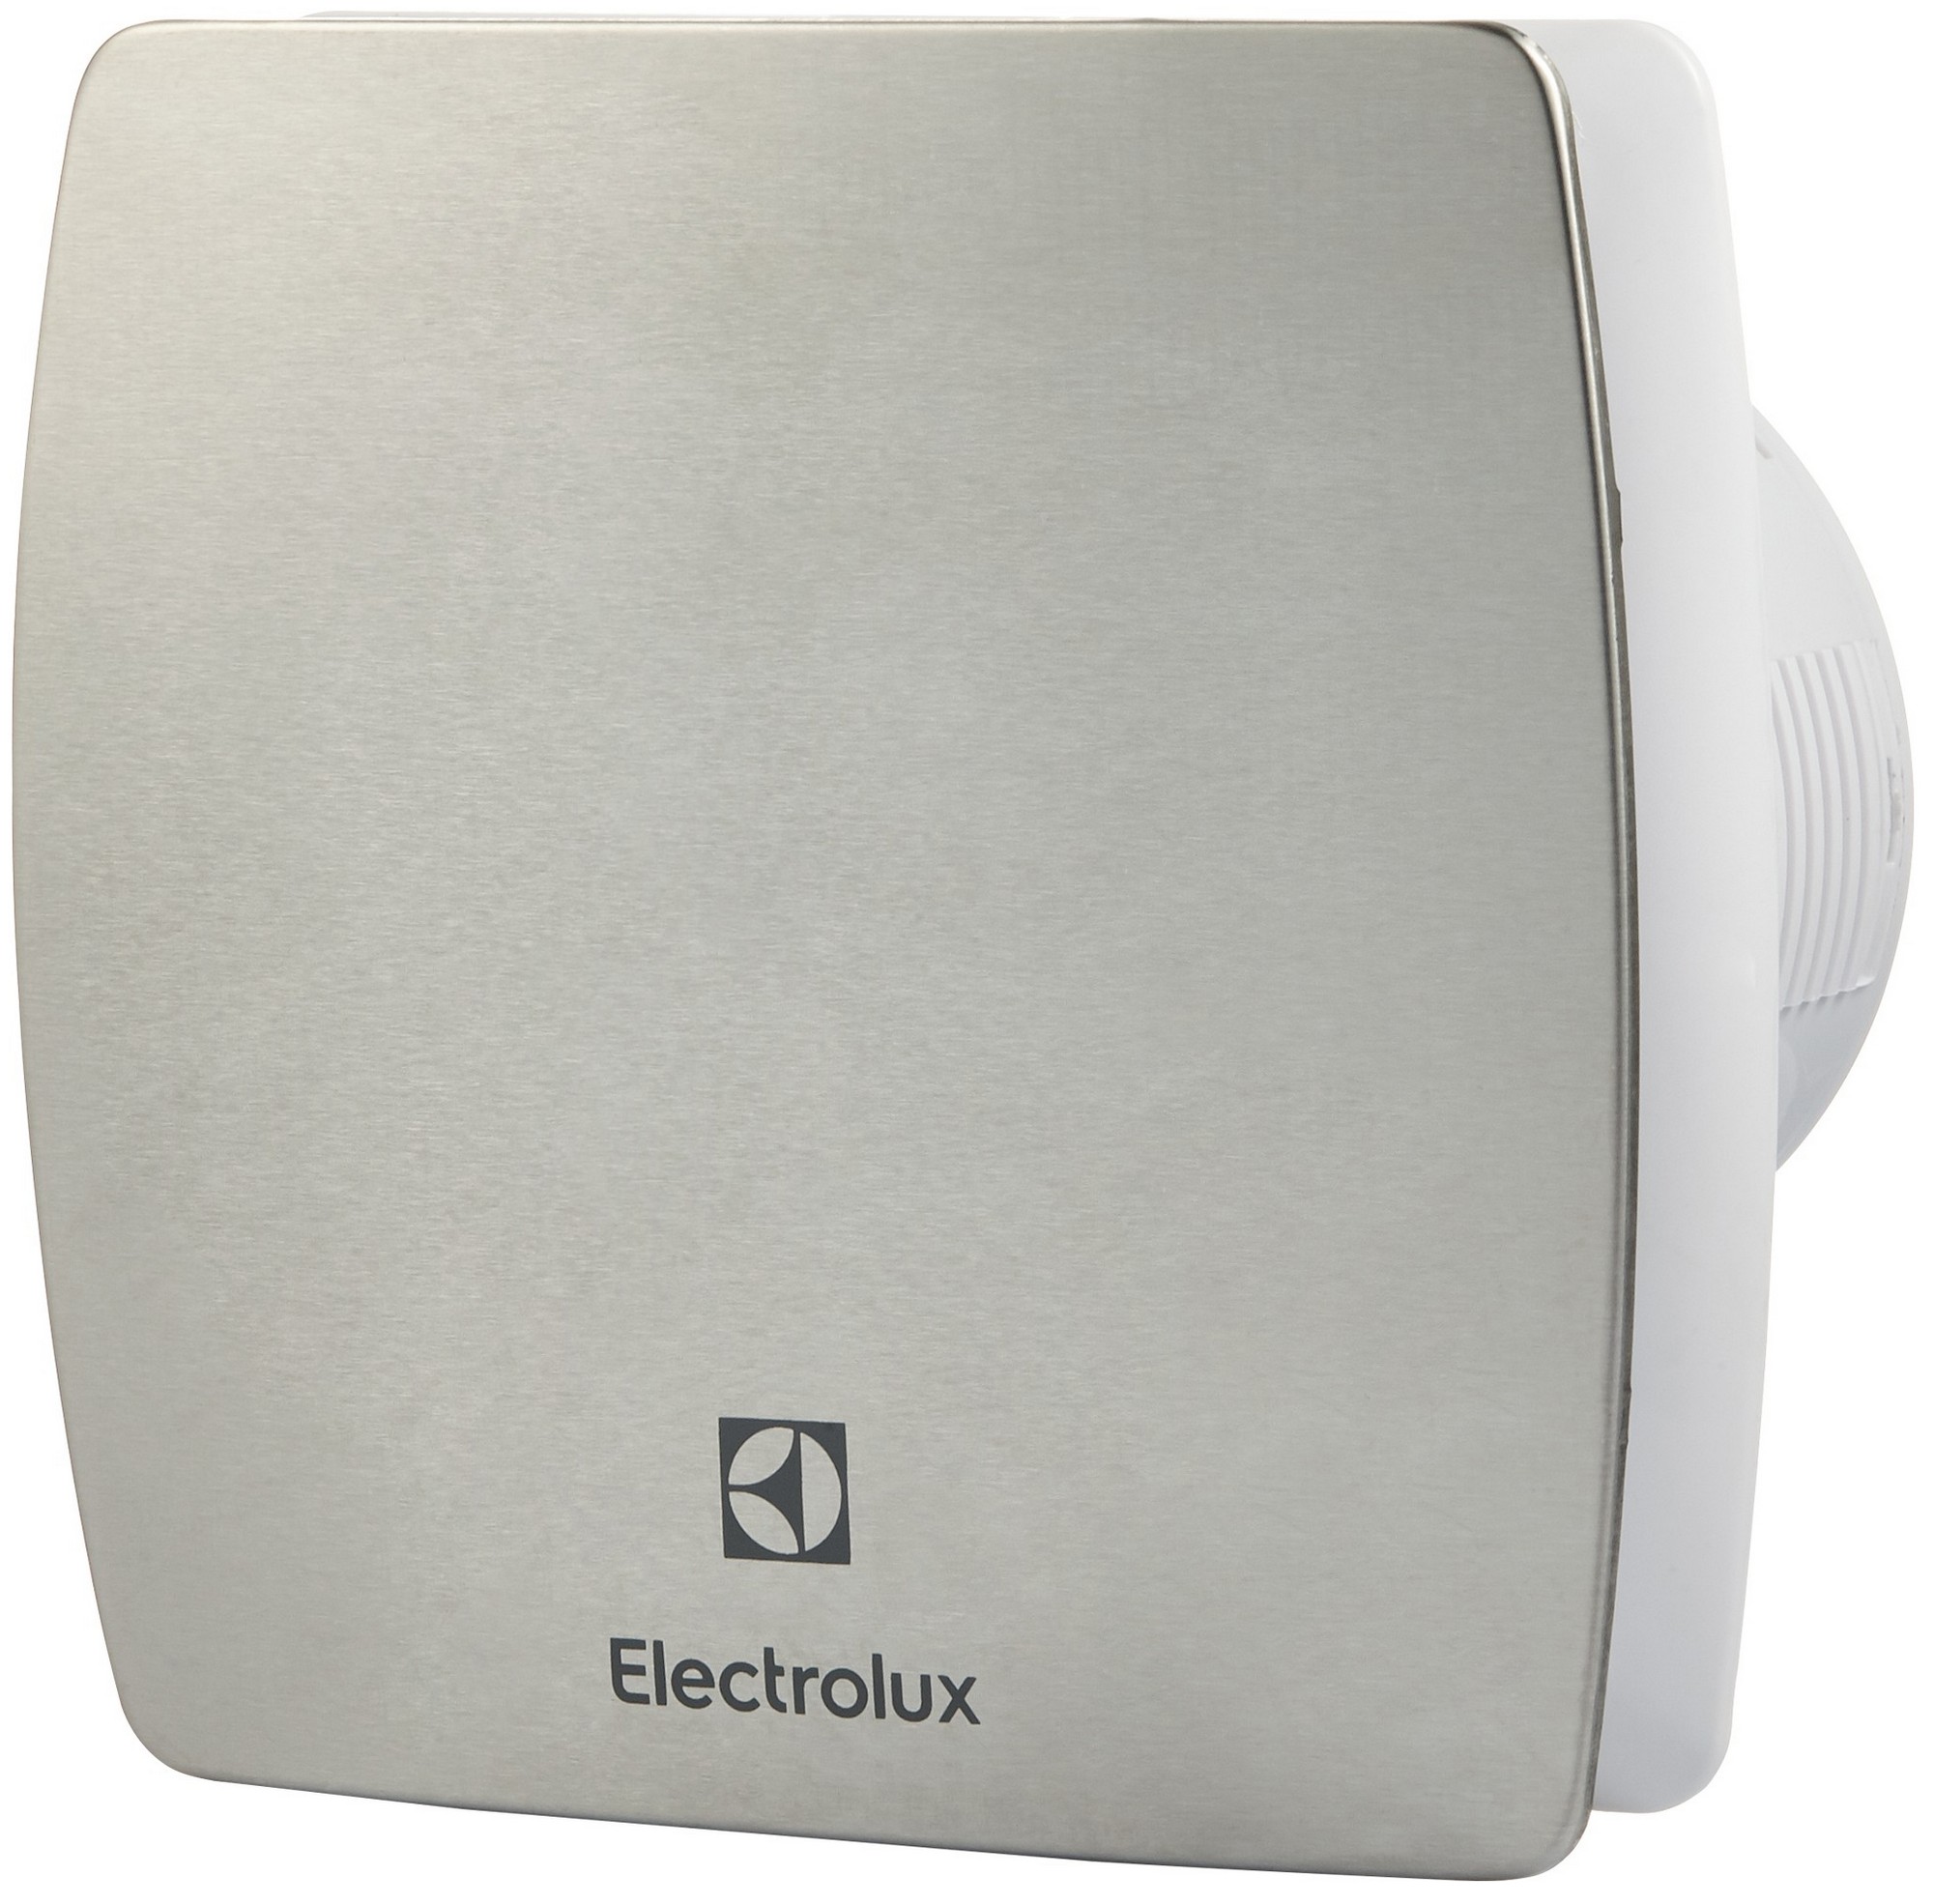 Вентилятор Electrolux с таймером выключения Electrolux Argentum EAFA-100TH